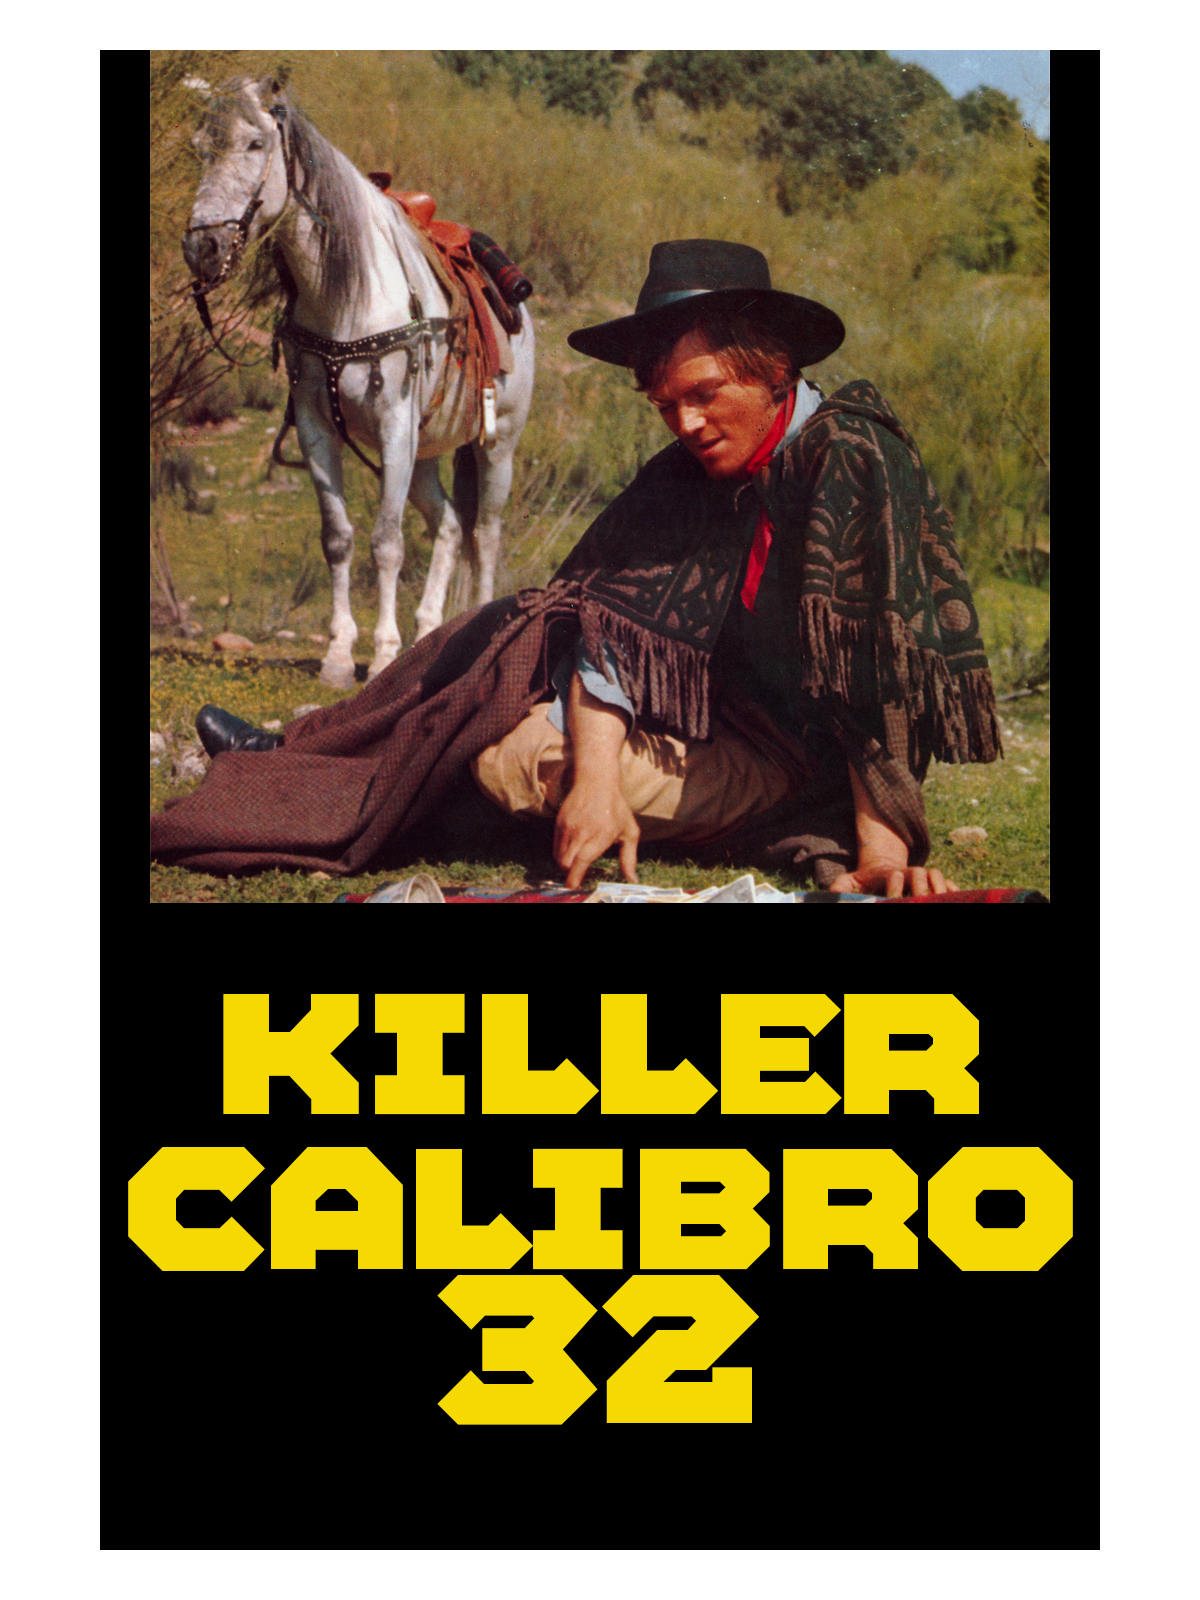 32 Caliber killer